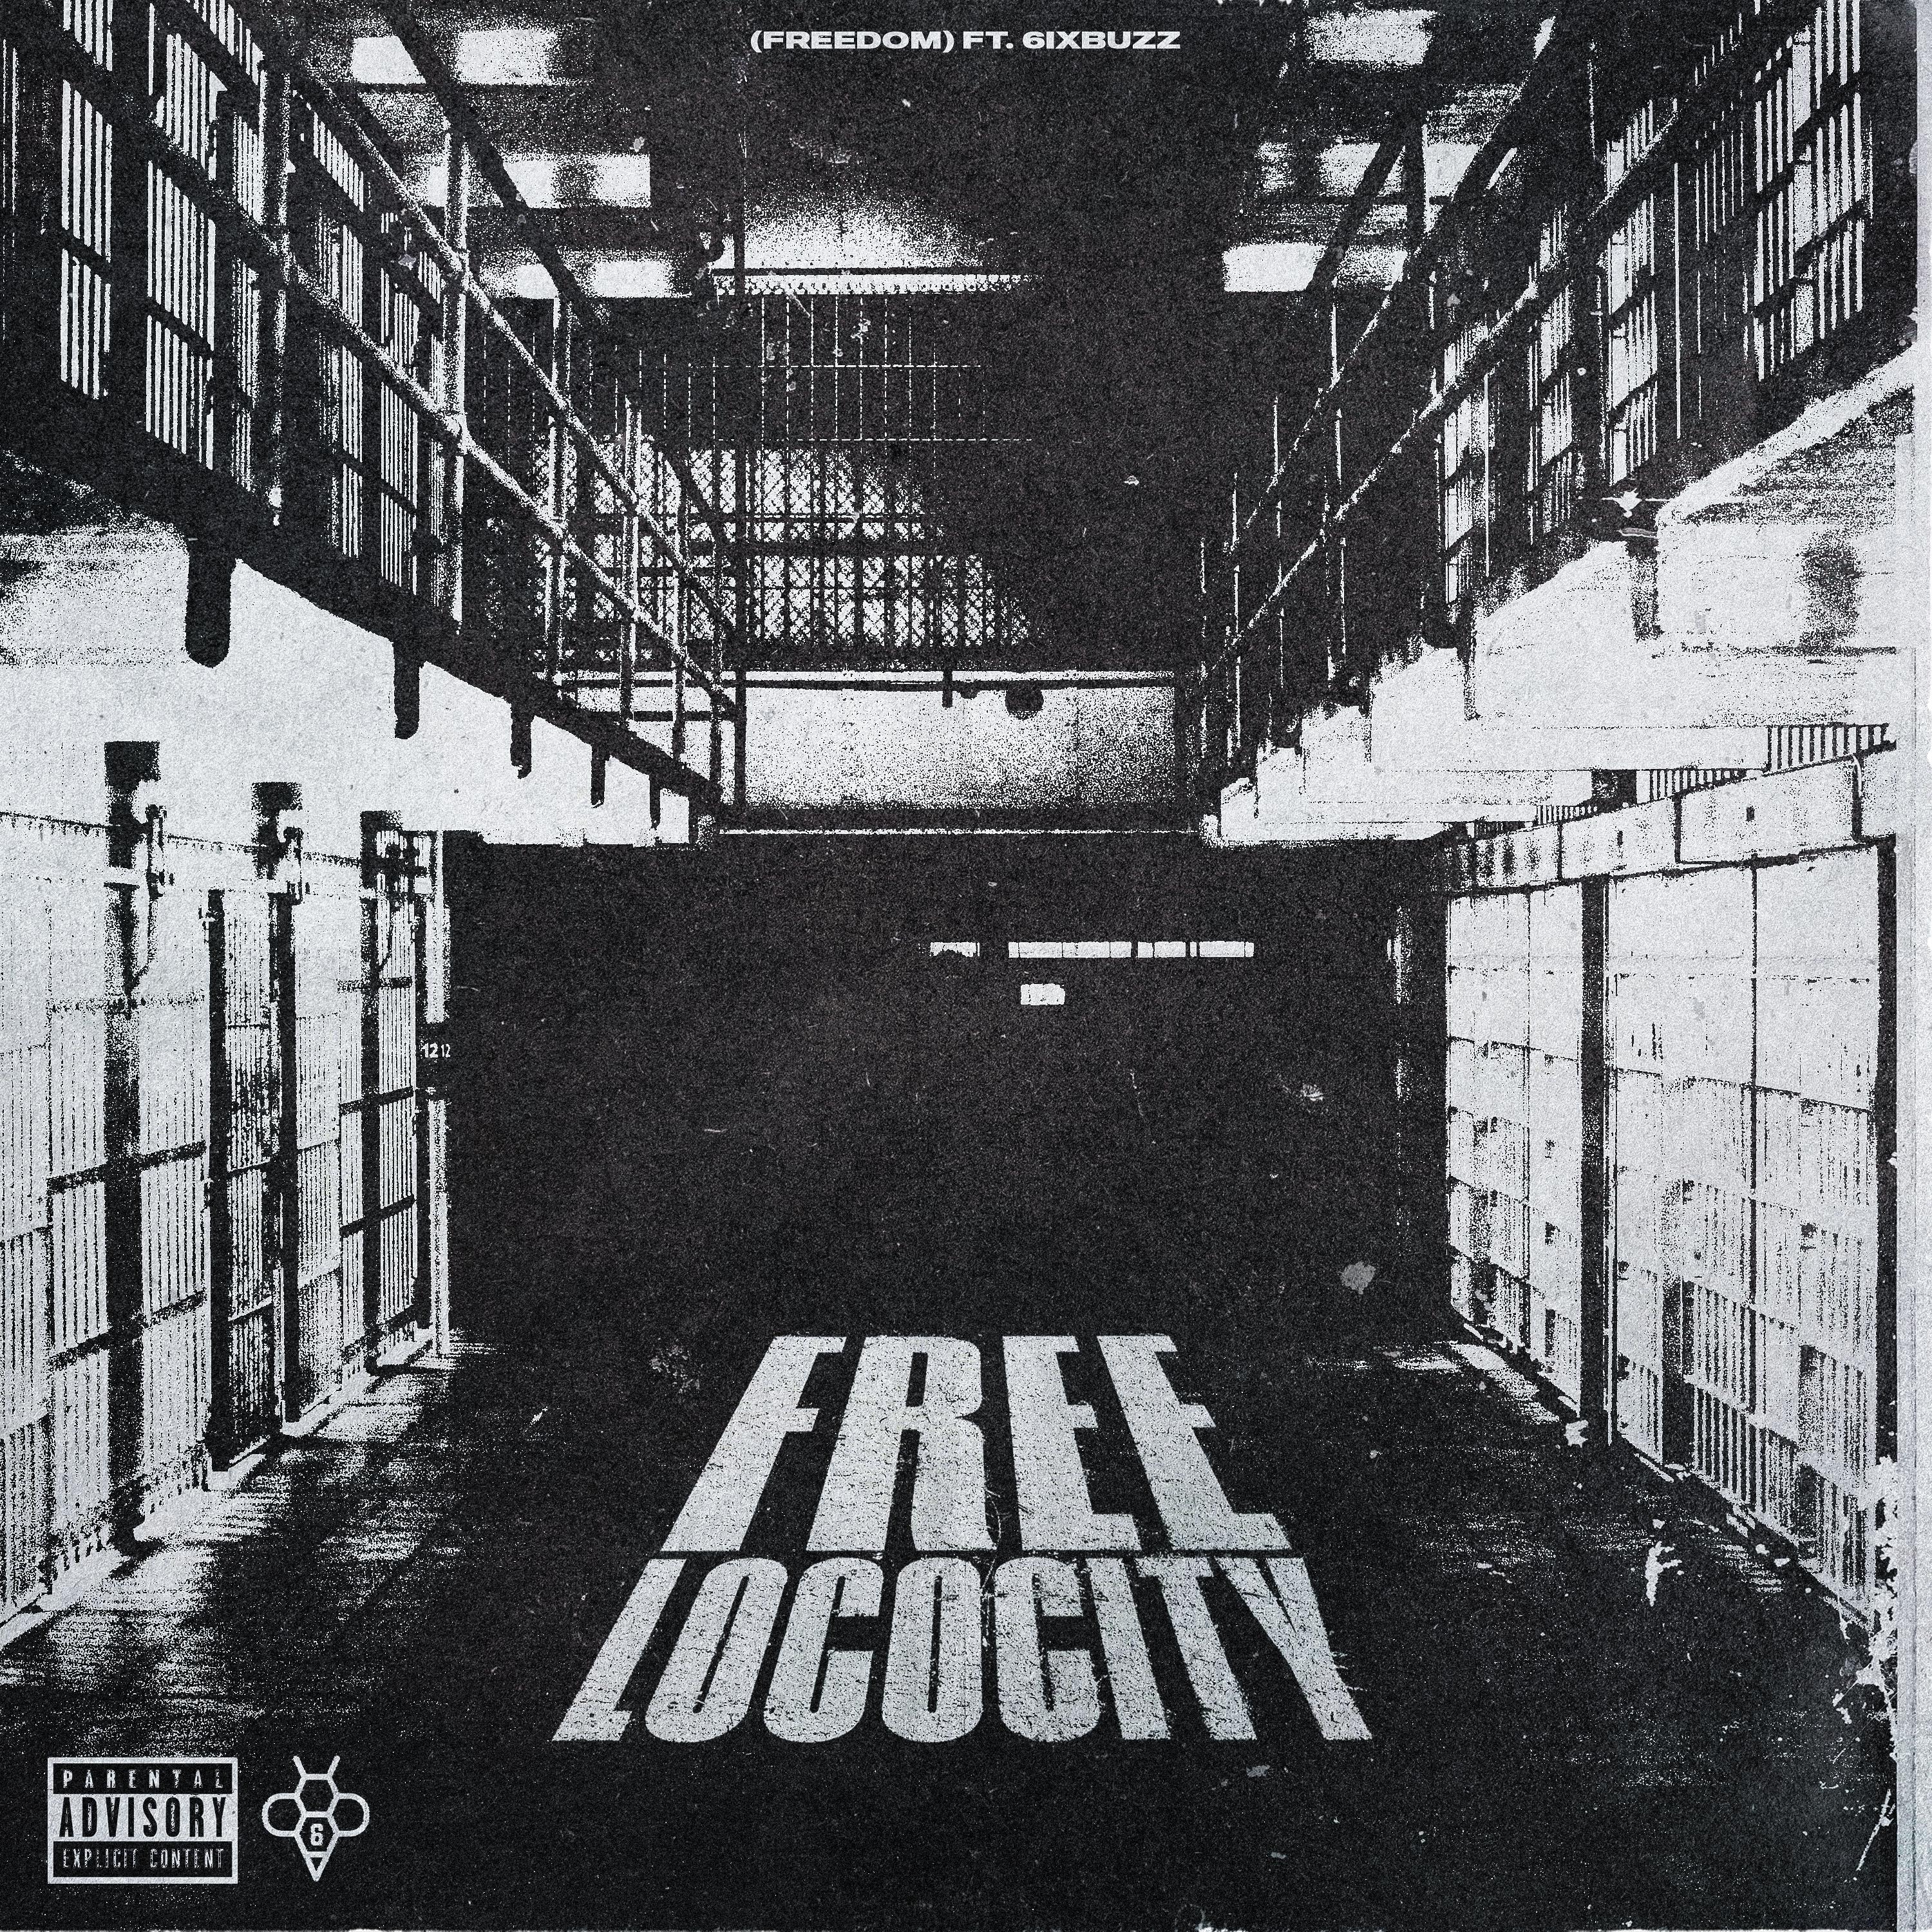 LocoCity - FreeLoco (Freedom)